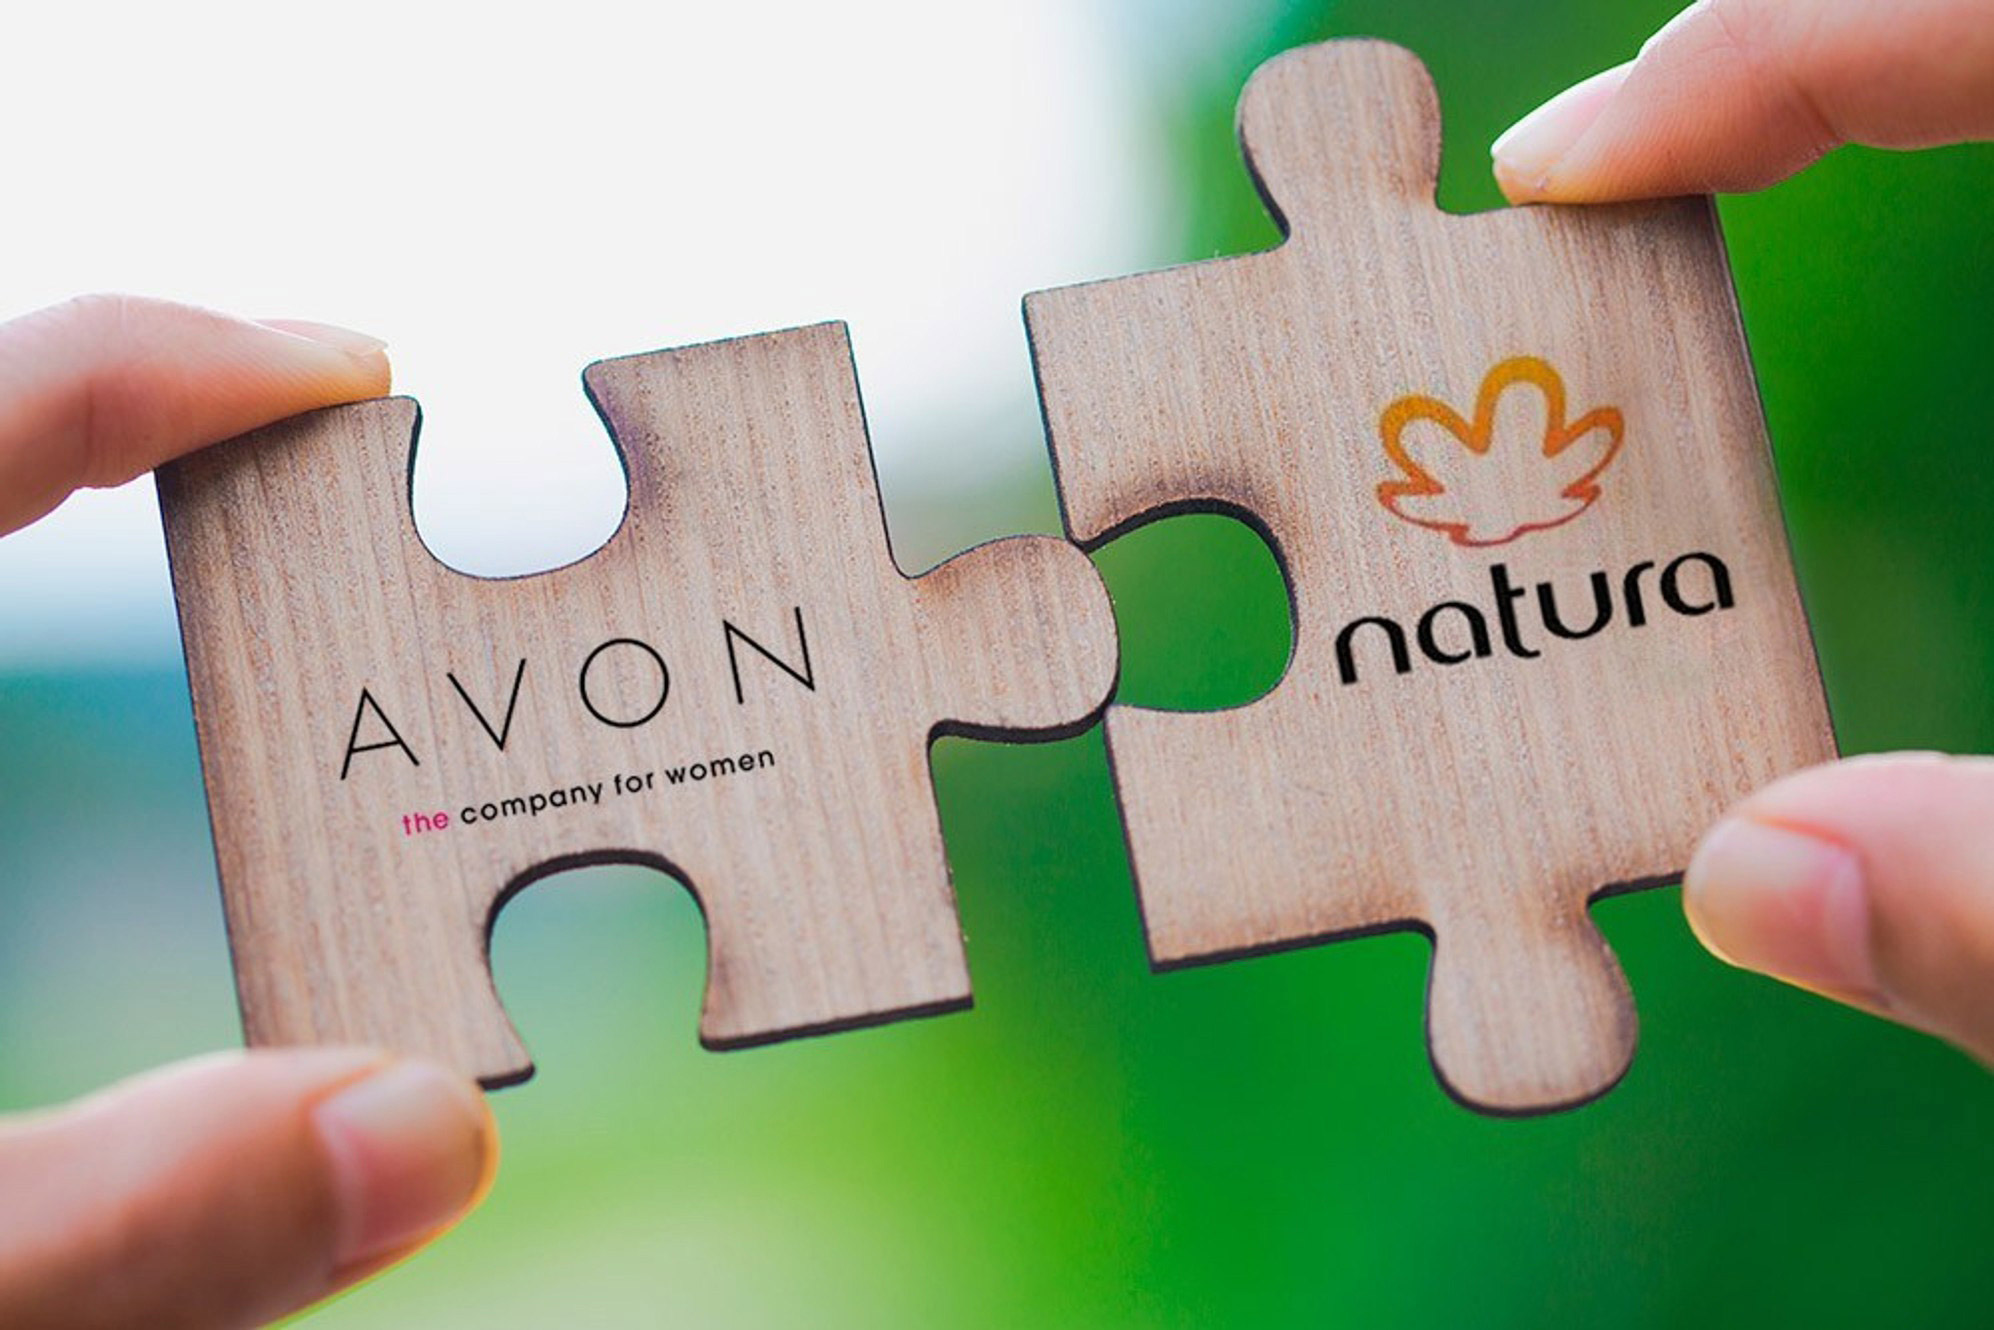 Natura compra Avon e vira a quarta maior do mundo no ramo da beleza, Beleza